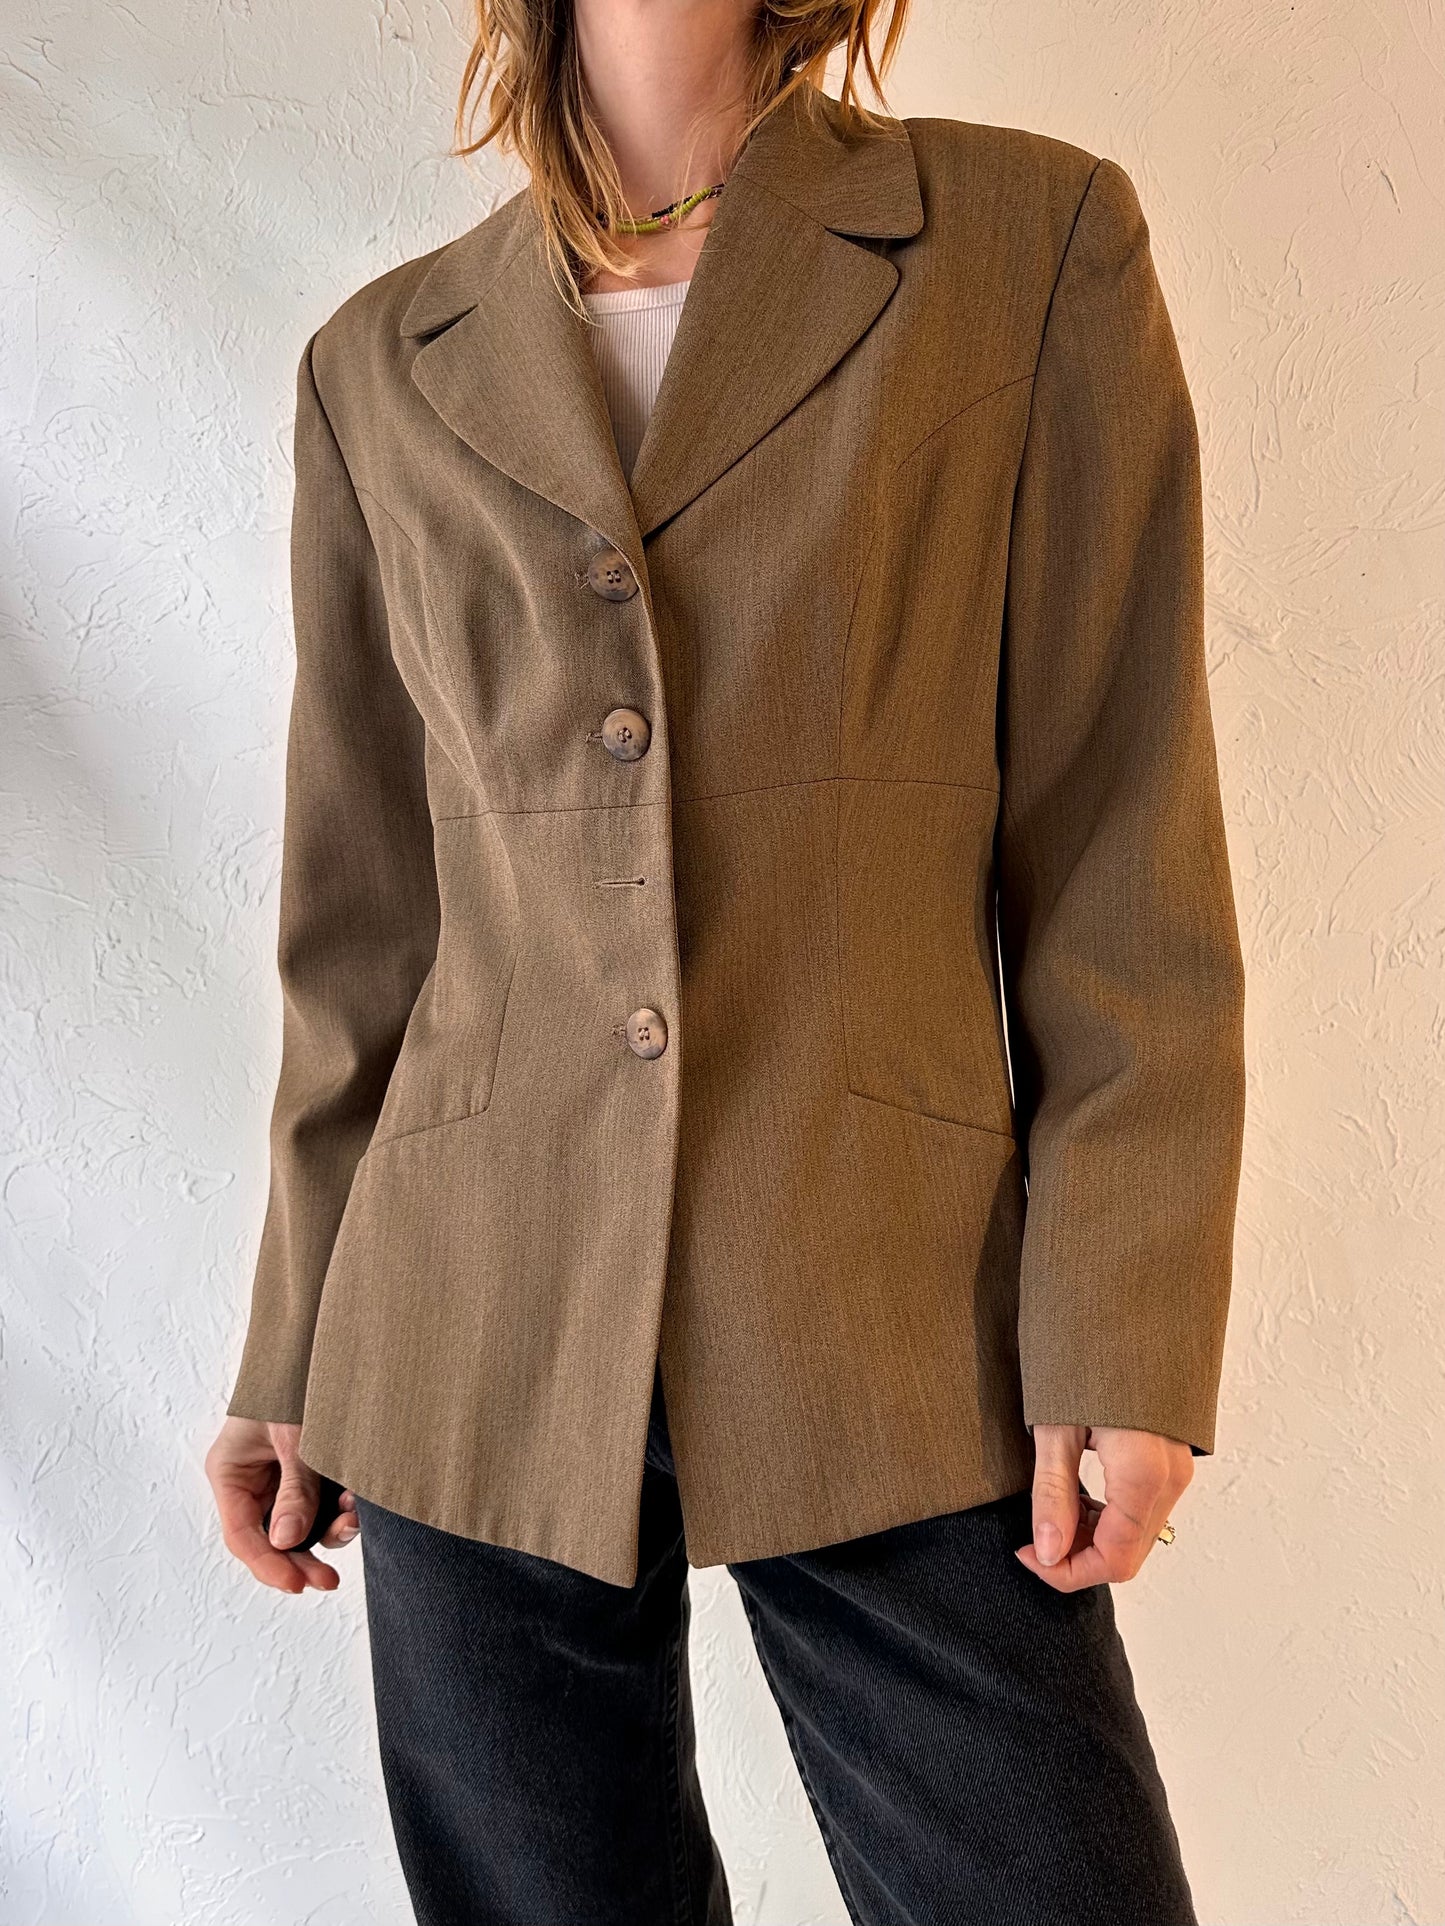 90s 'Bebe' Brown Blazer Jacket / Medium